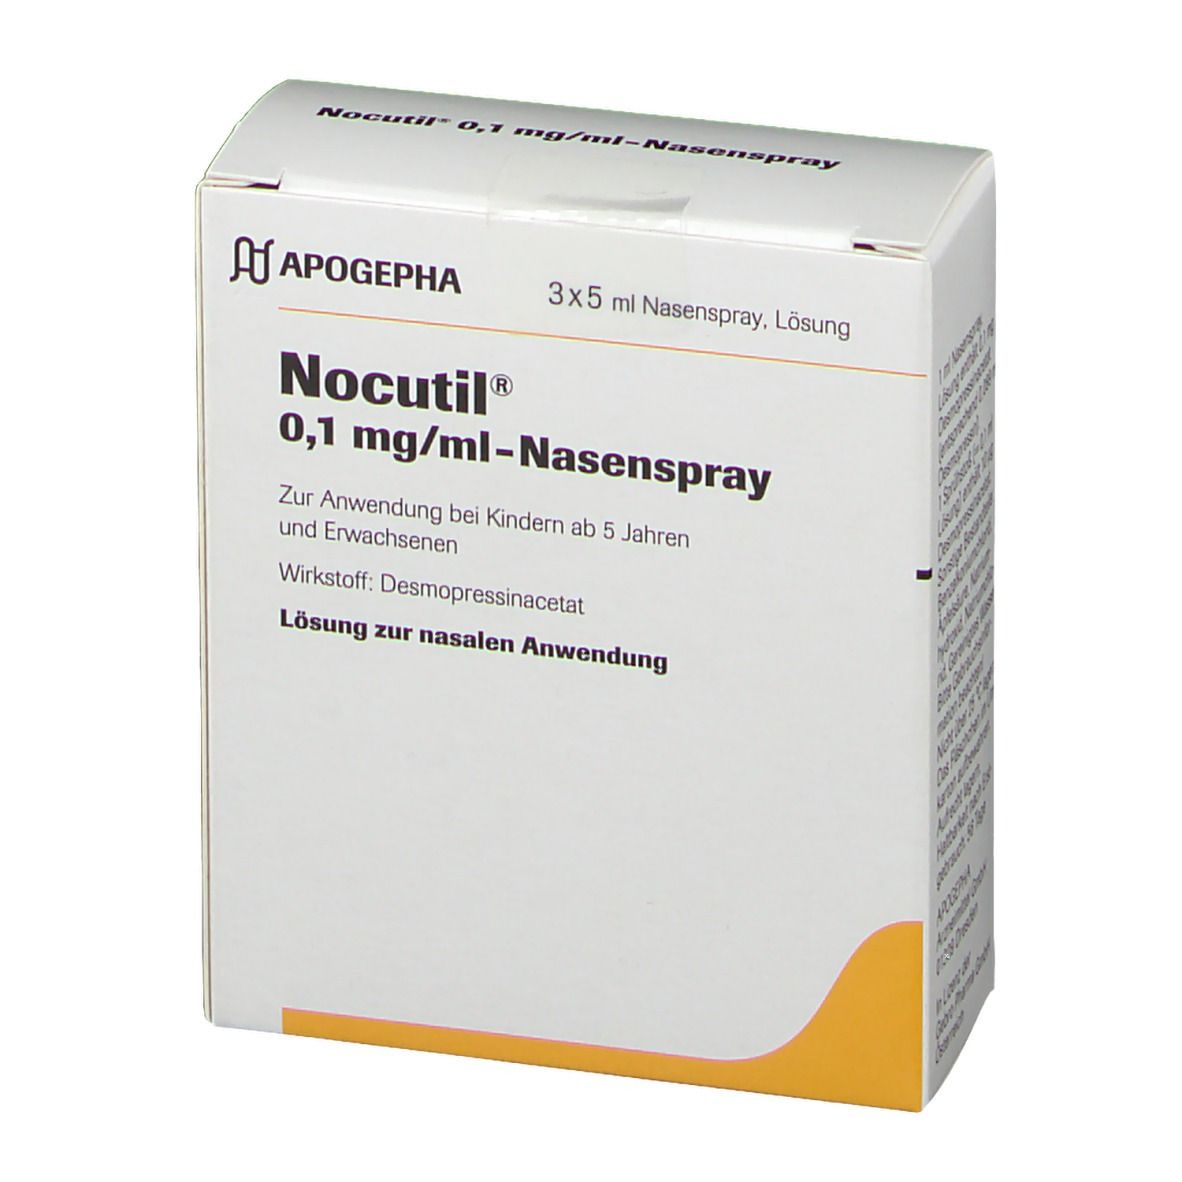 Nocutil® Nasenspray